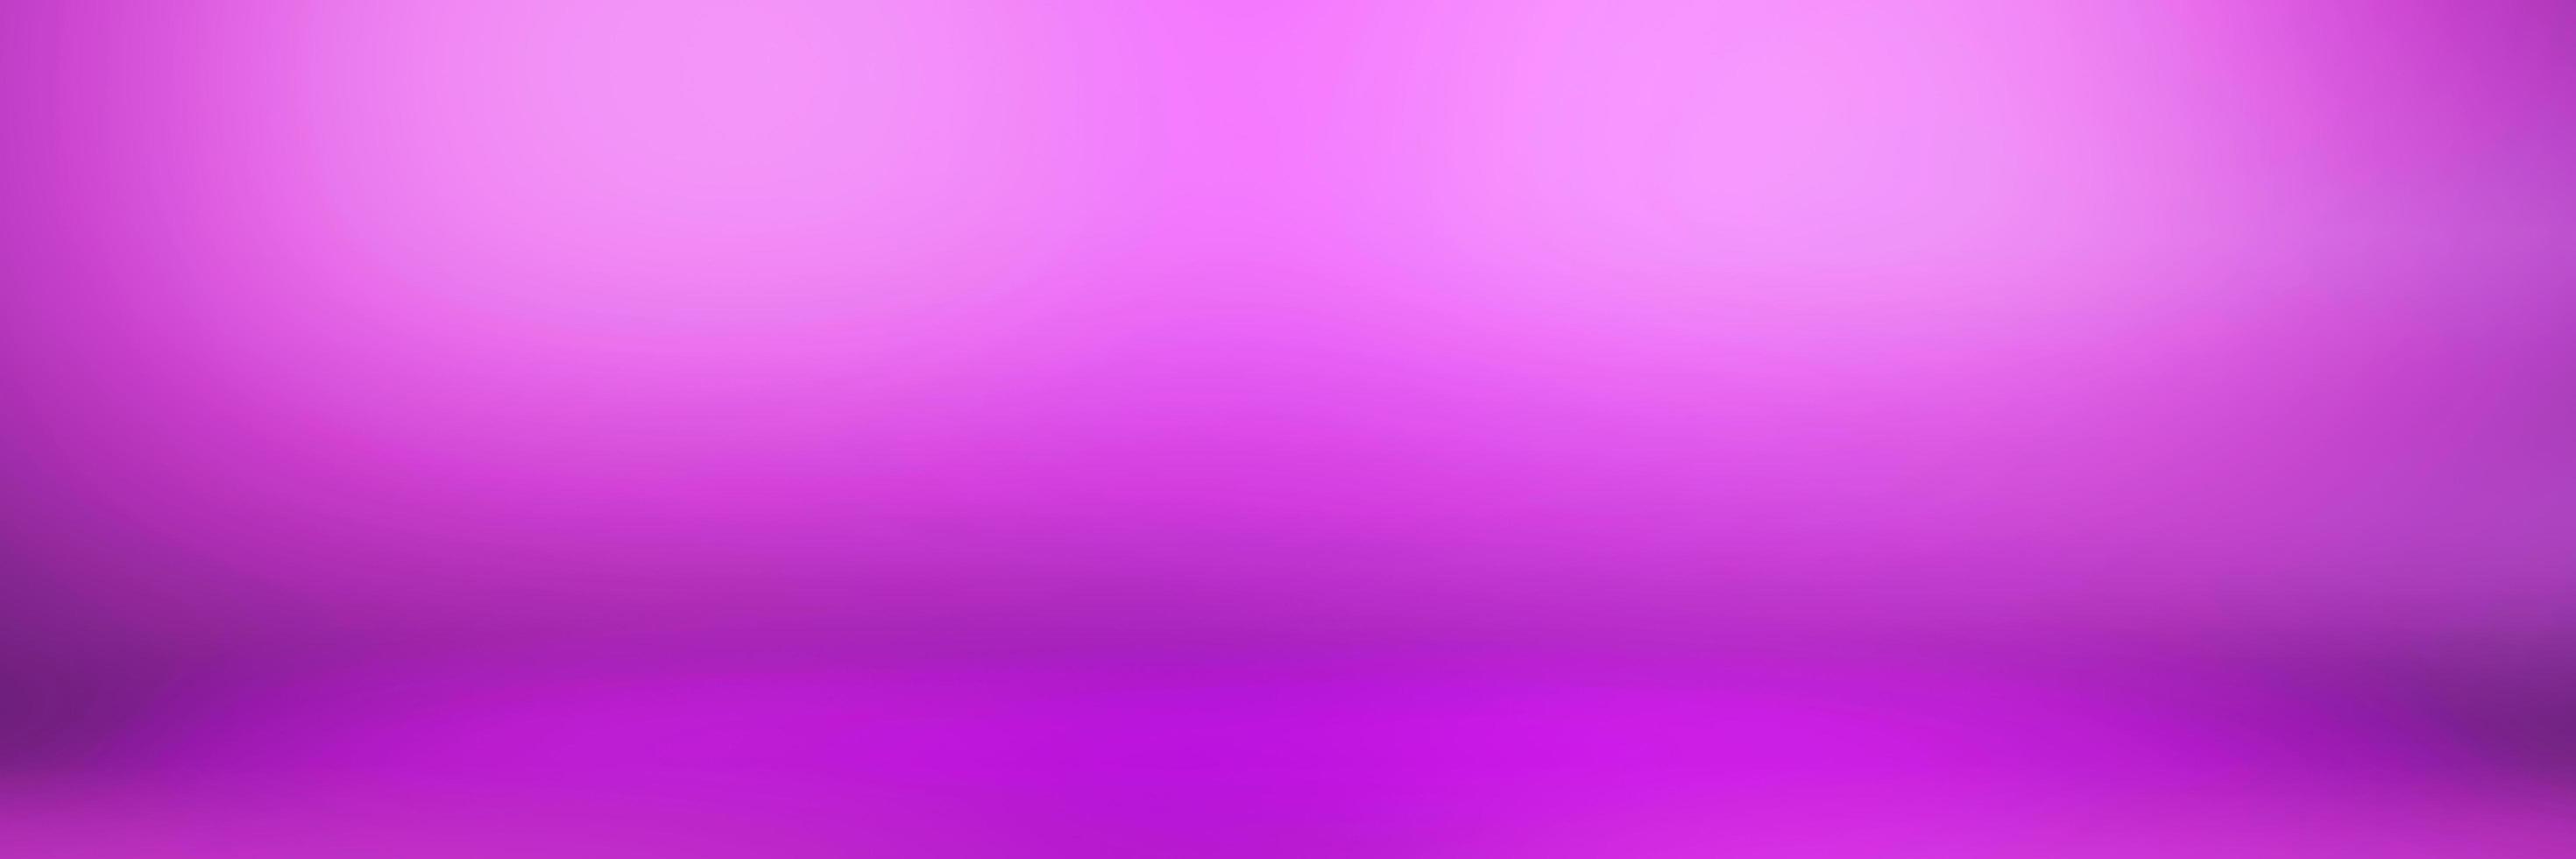 fundo gradiente de cor violeta de veludo luz abstrato foto